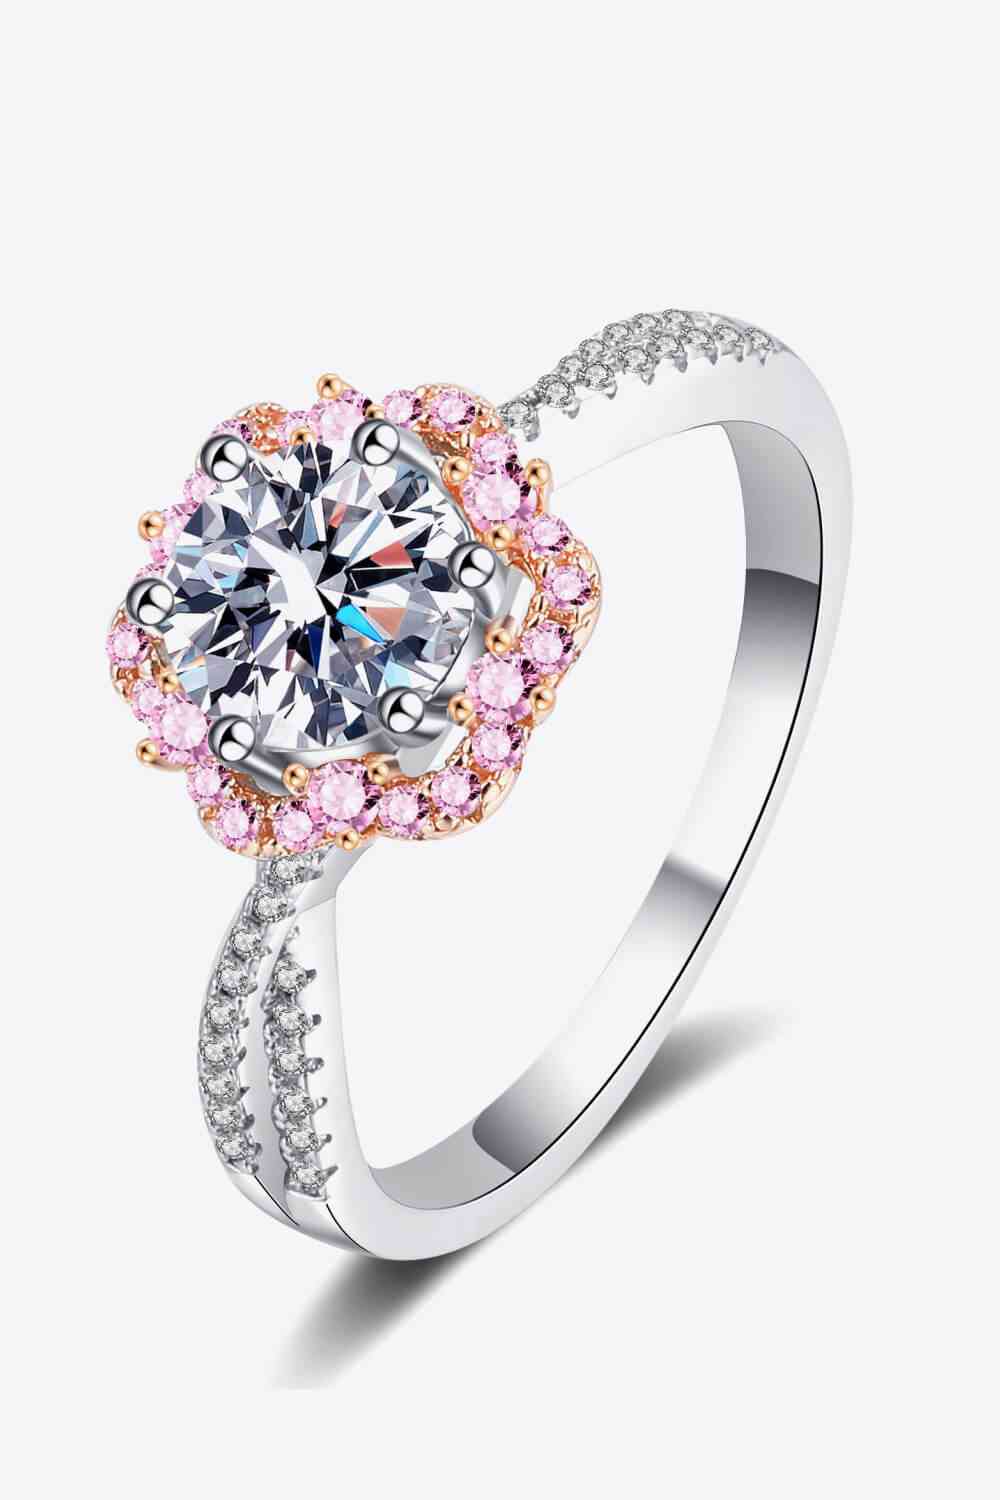 Floral Fusion: 1 Carat Moissanite Ring